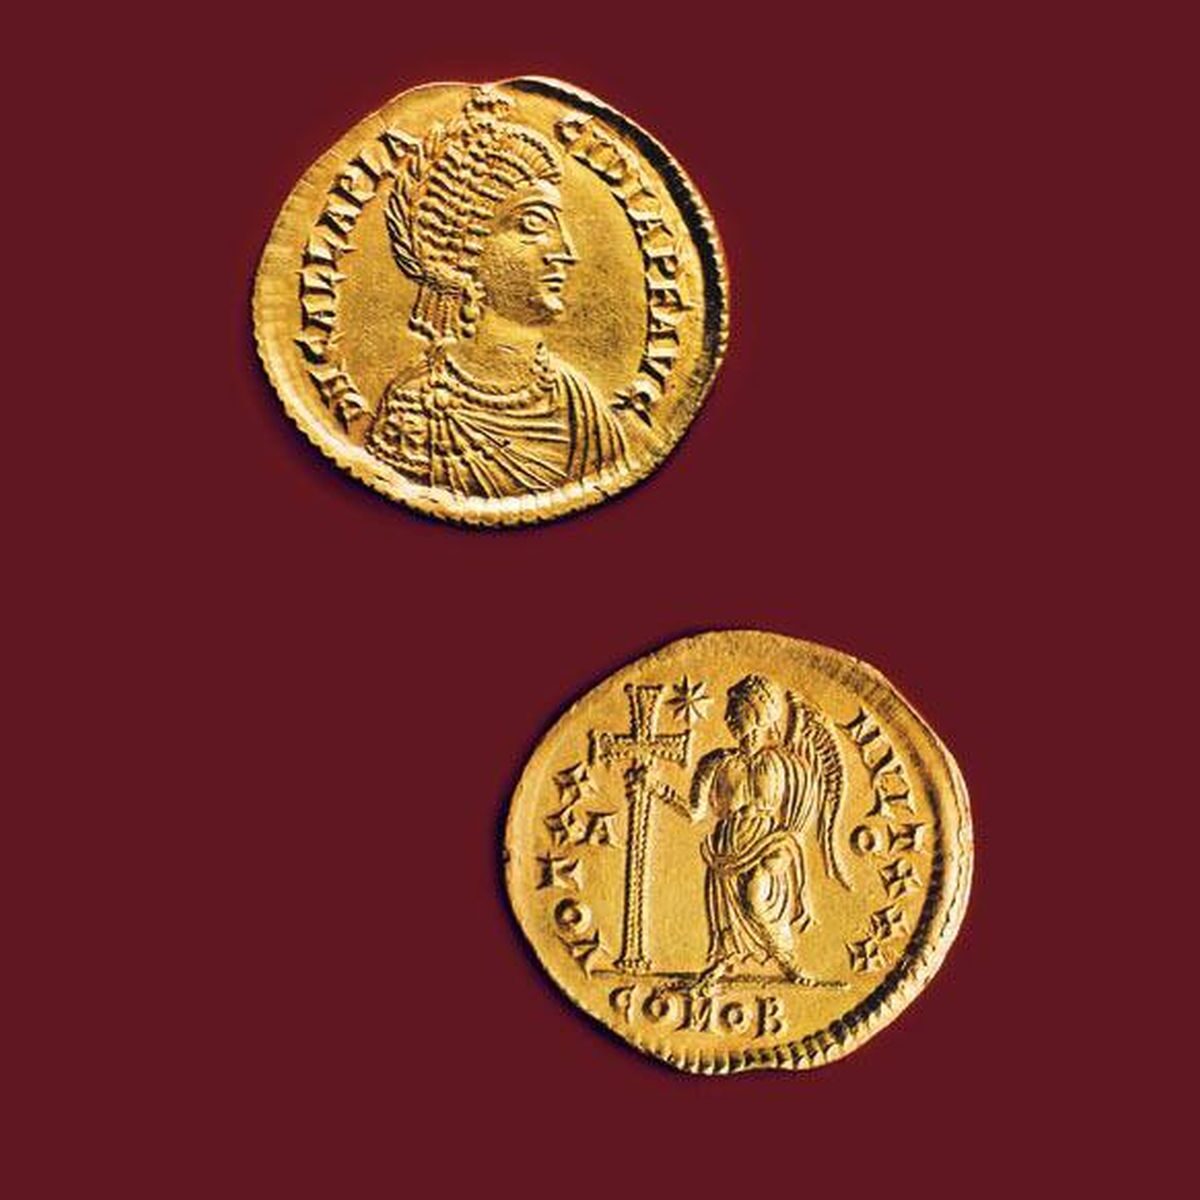 Roman coin showing Galla Placidia